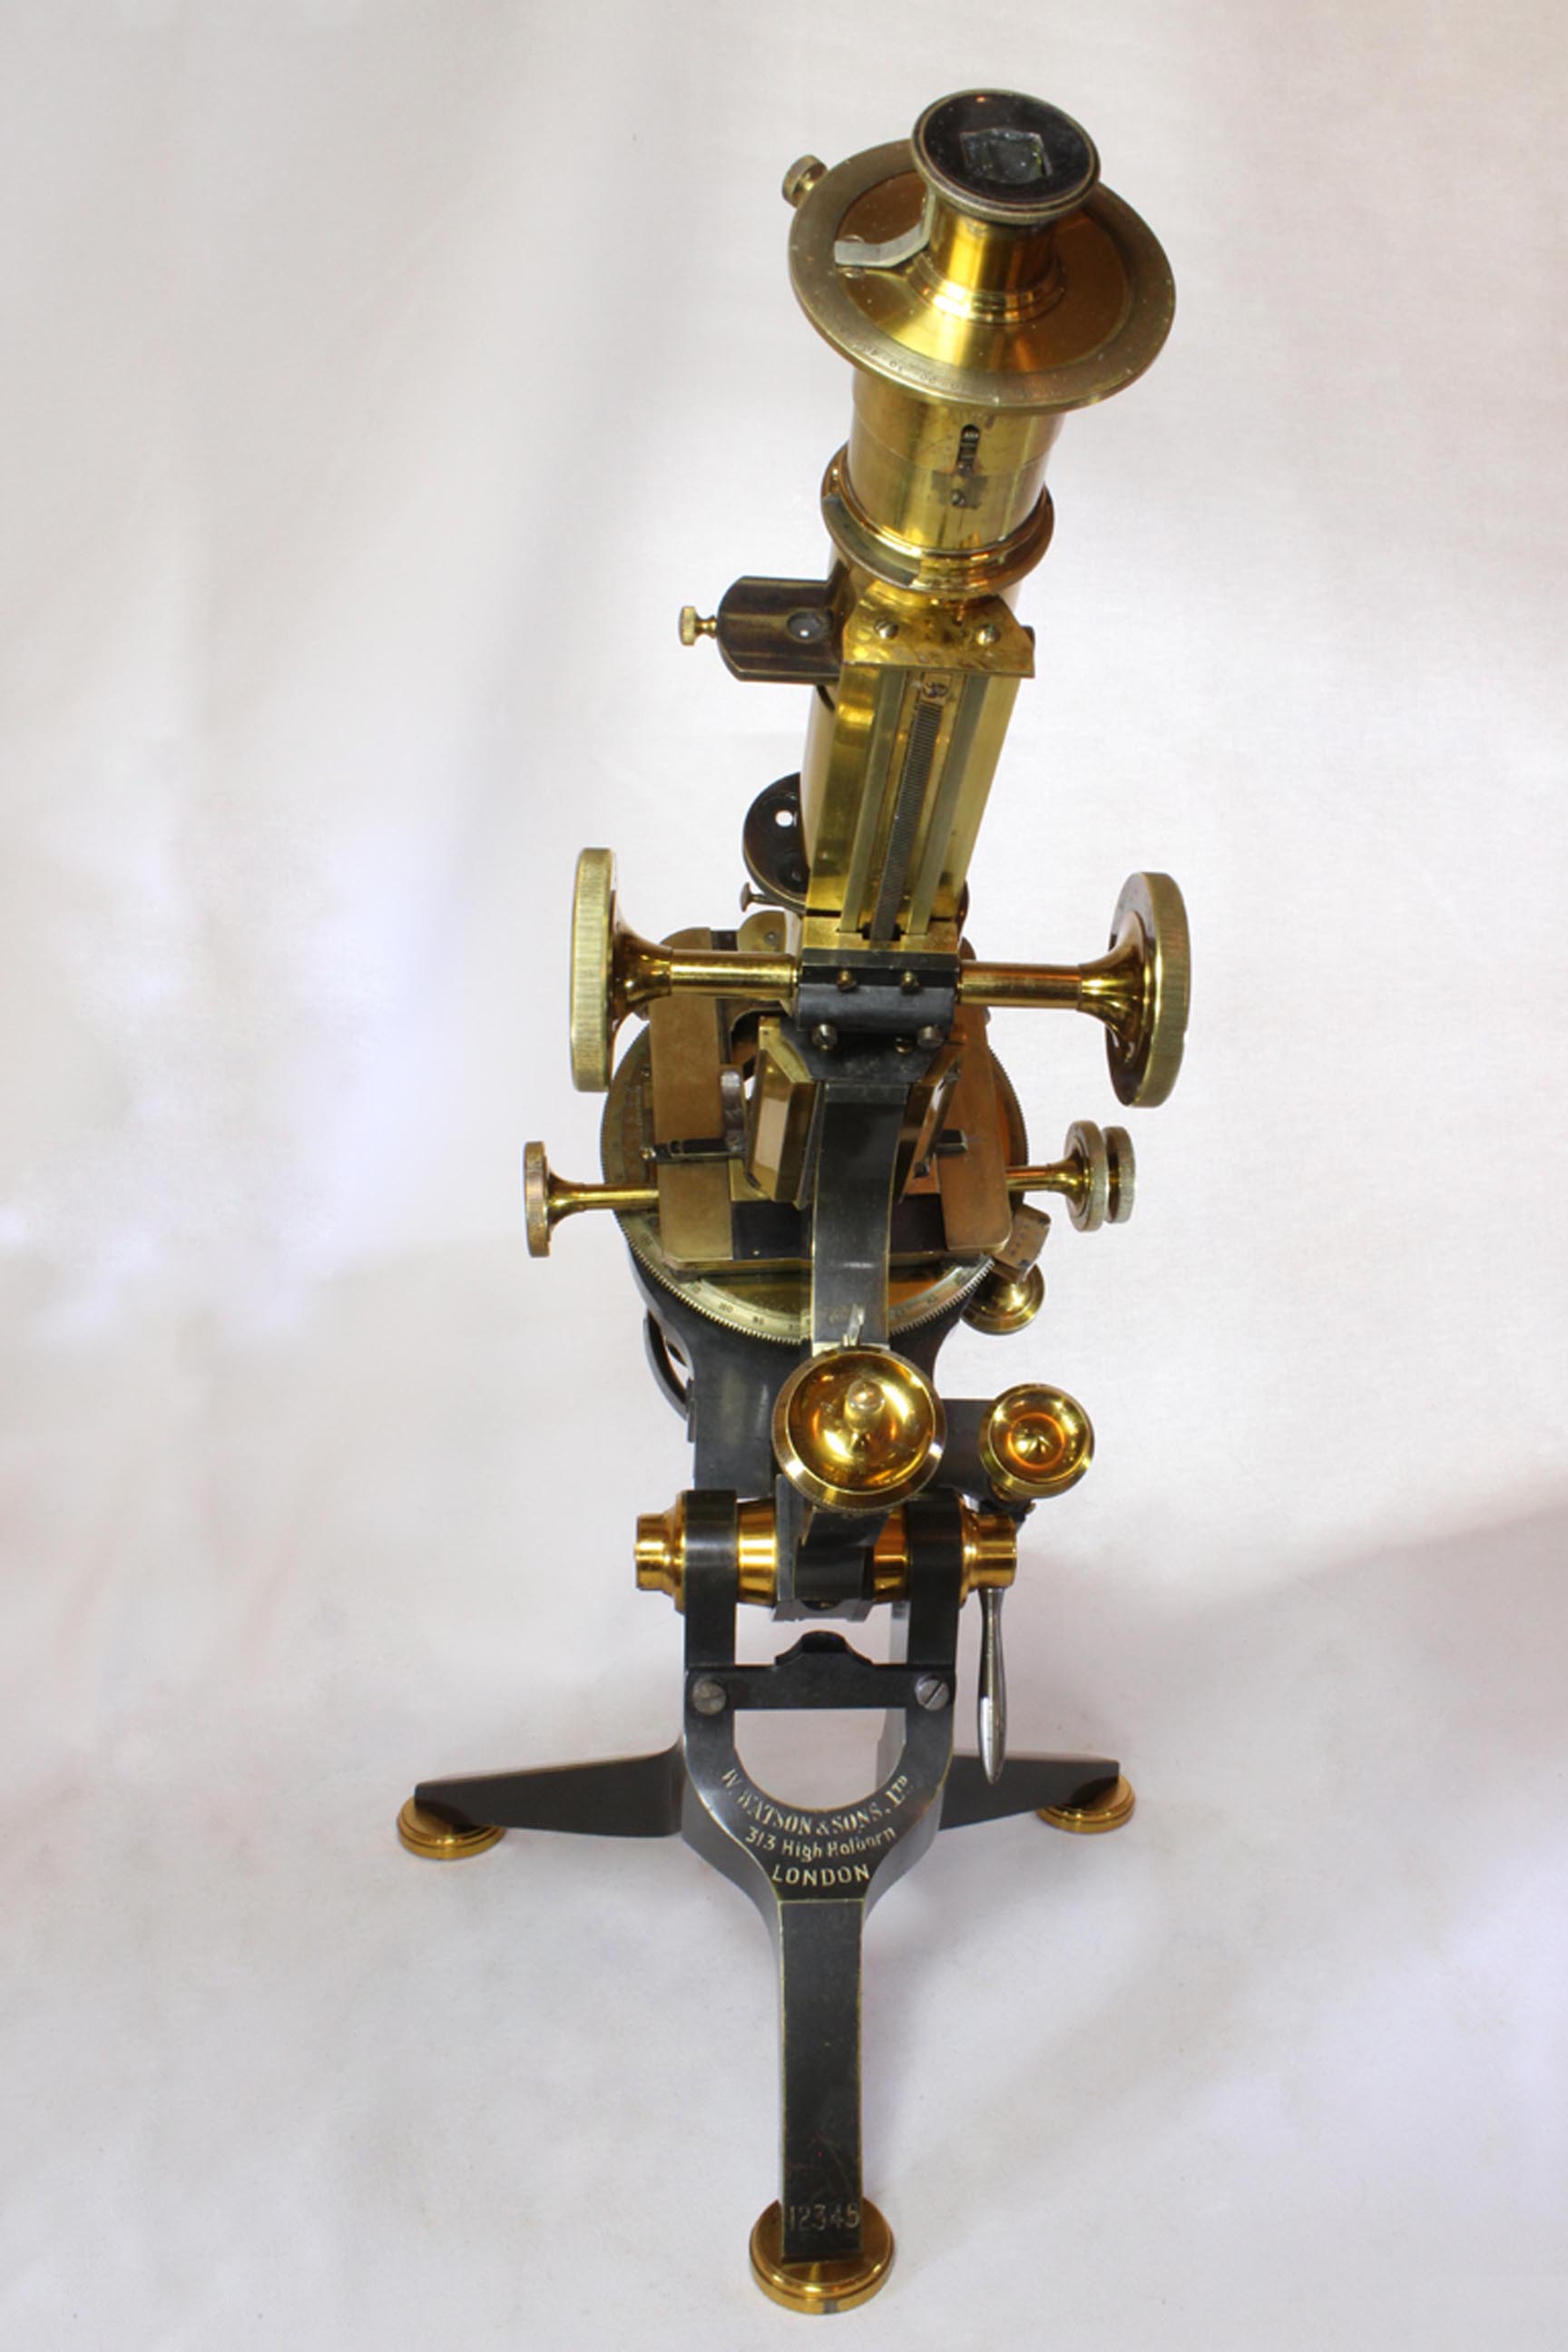 
Grand Van Heurck Microscope